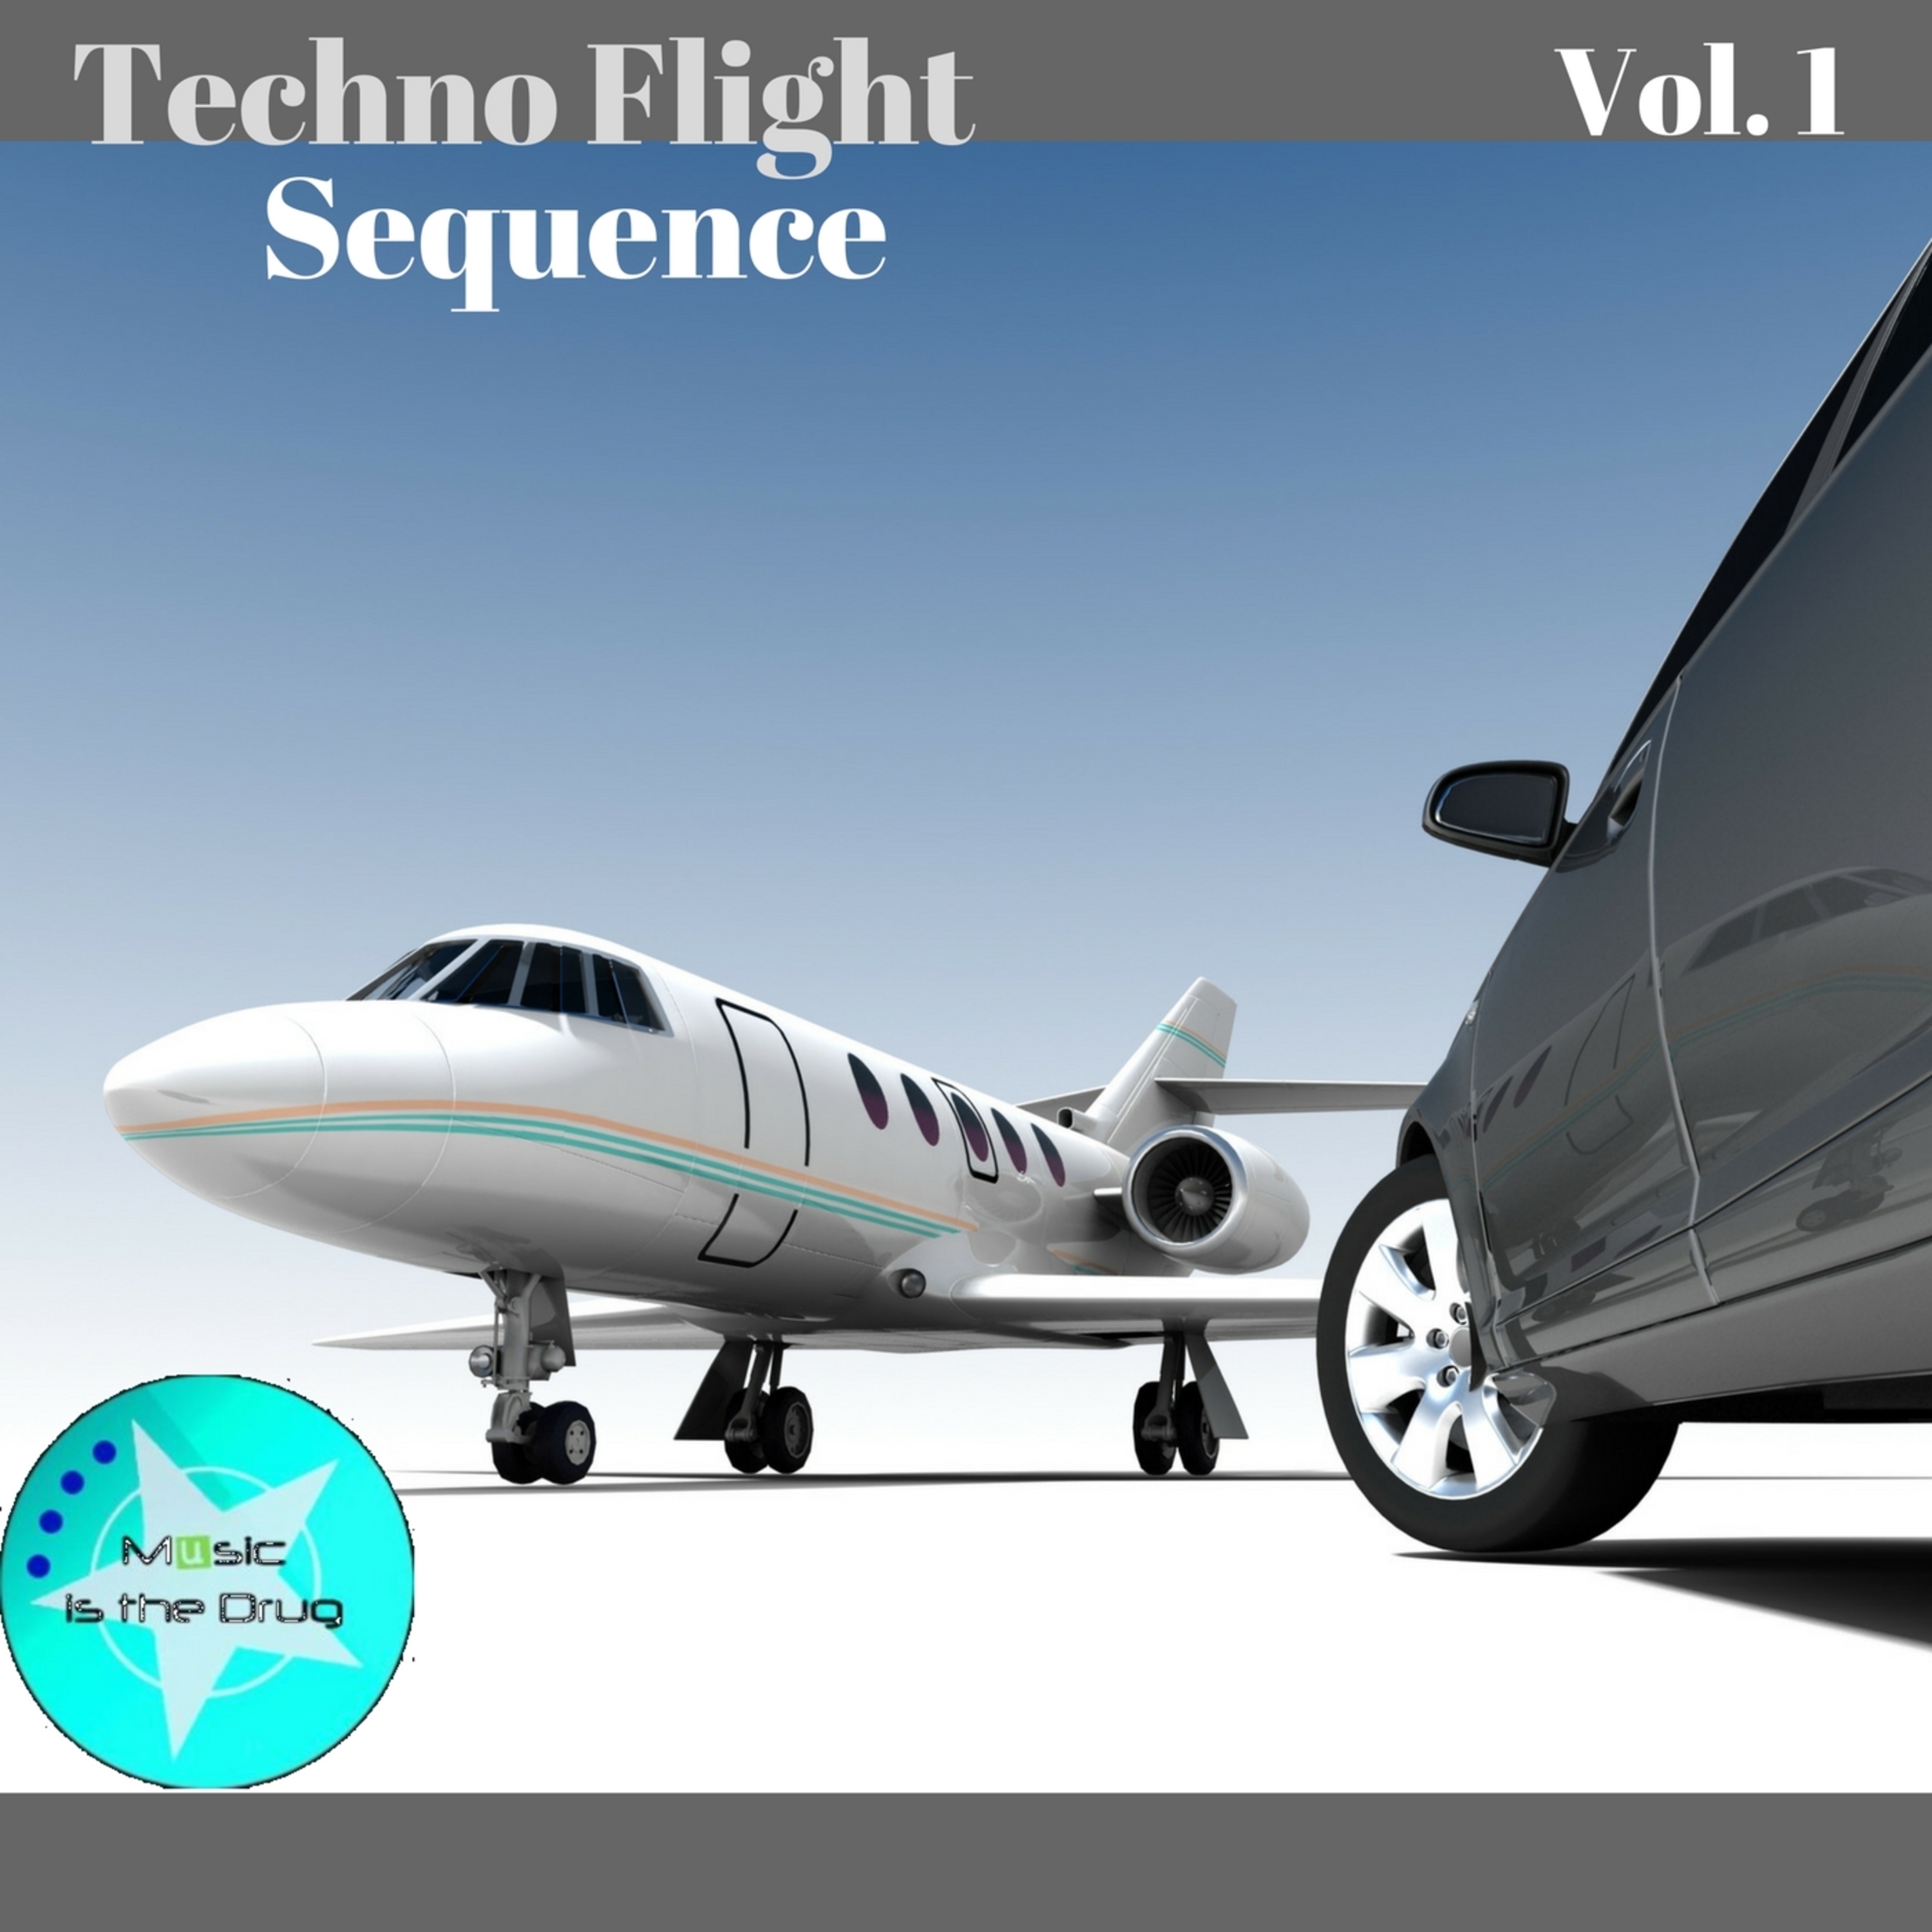 Techno Flight Sequence Vol. 1